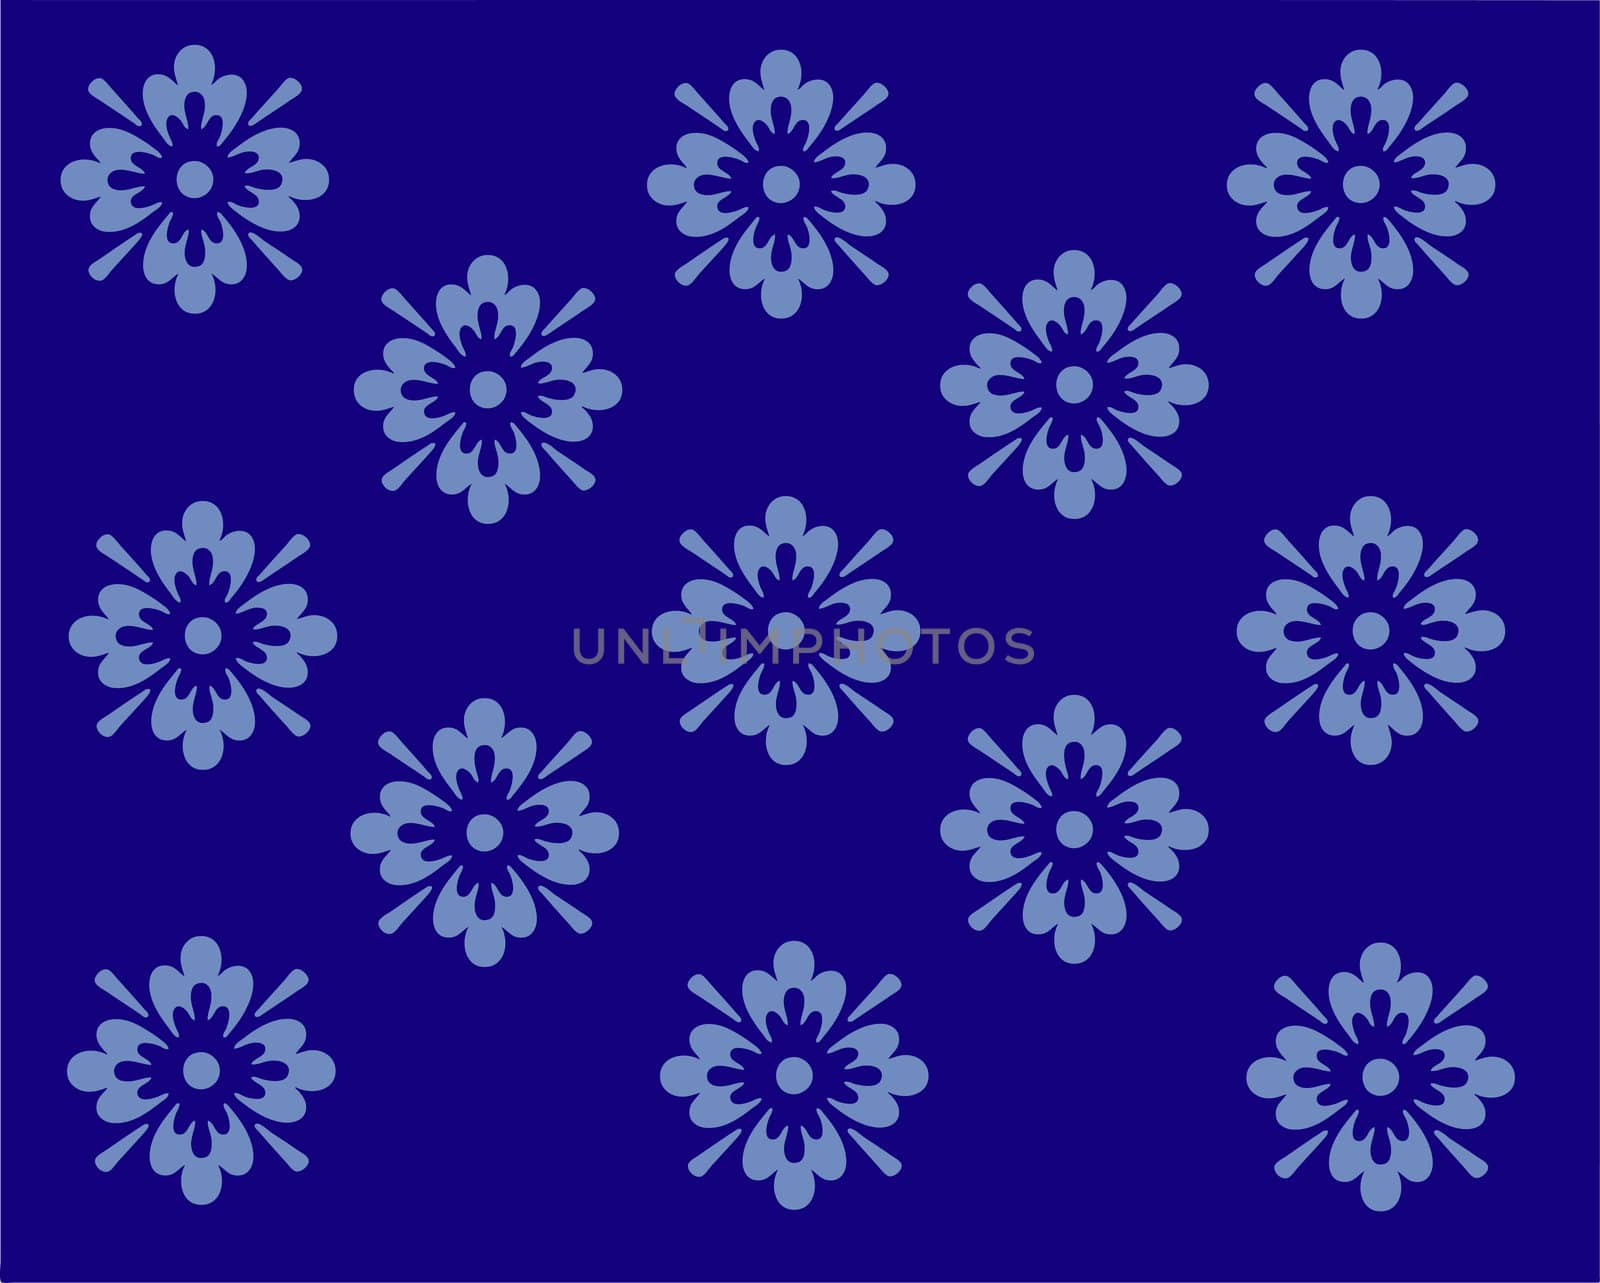 illustration of a wallpaper design in blue